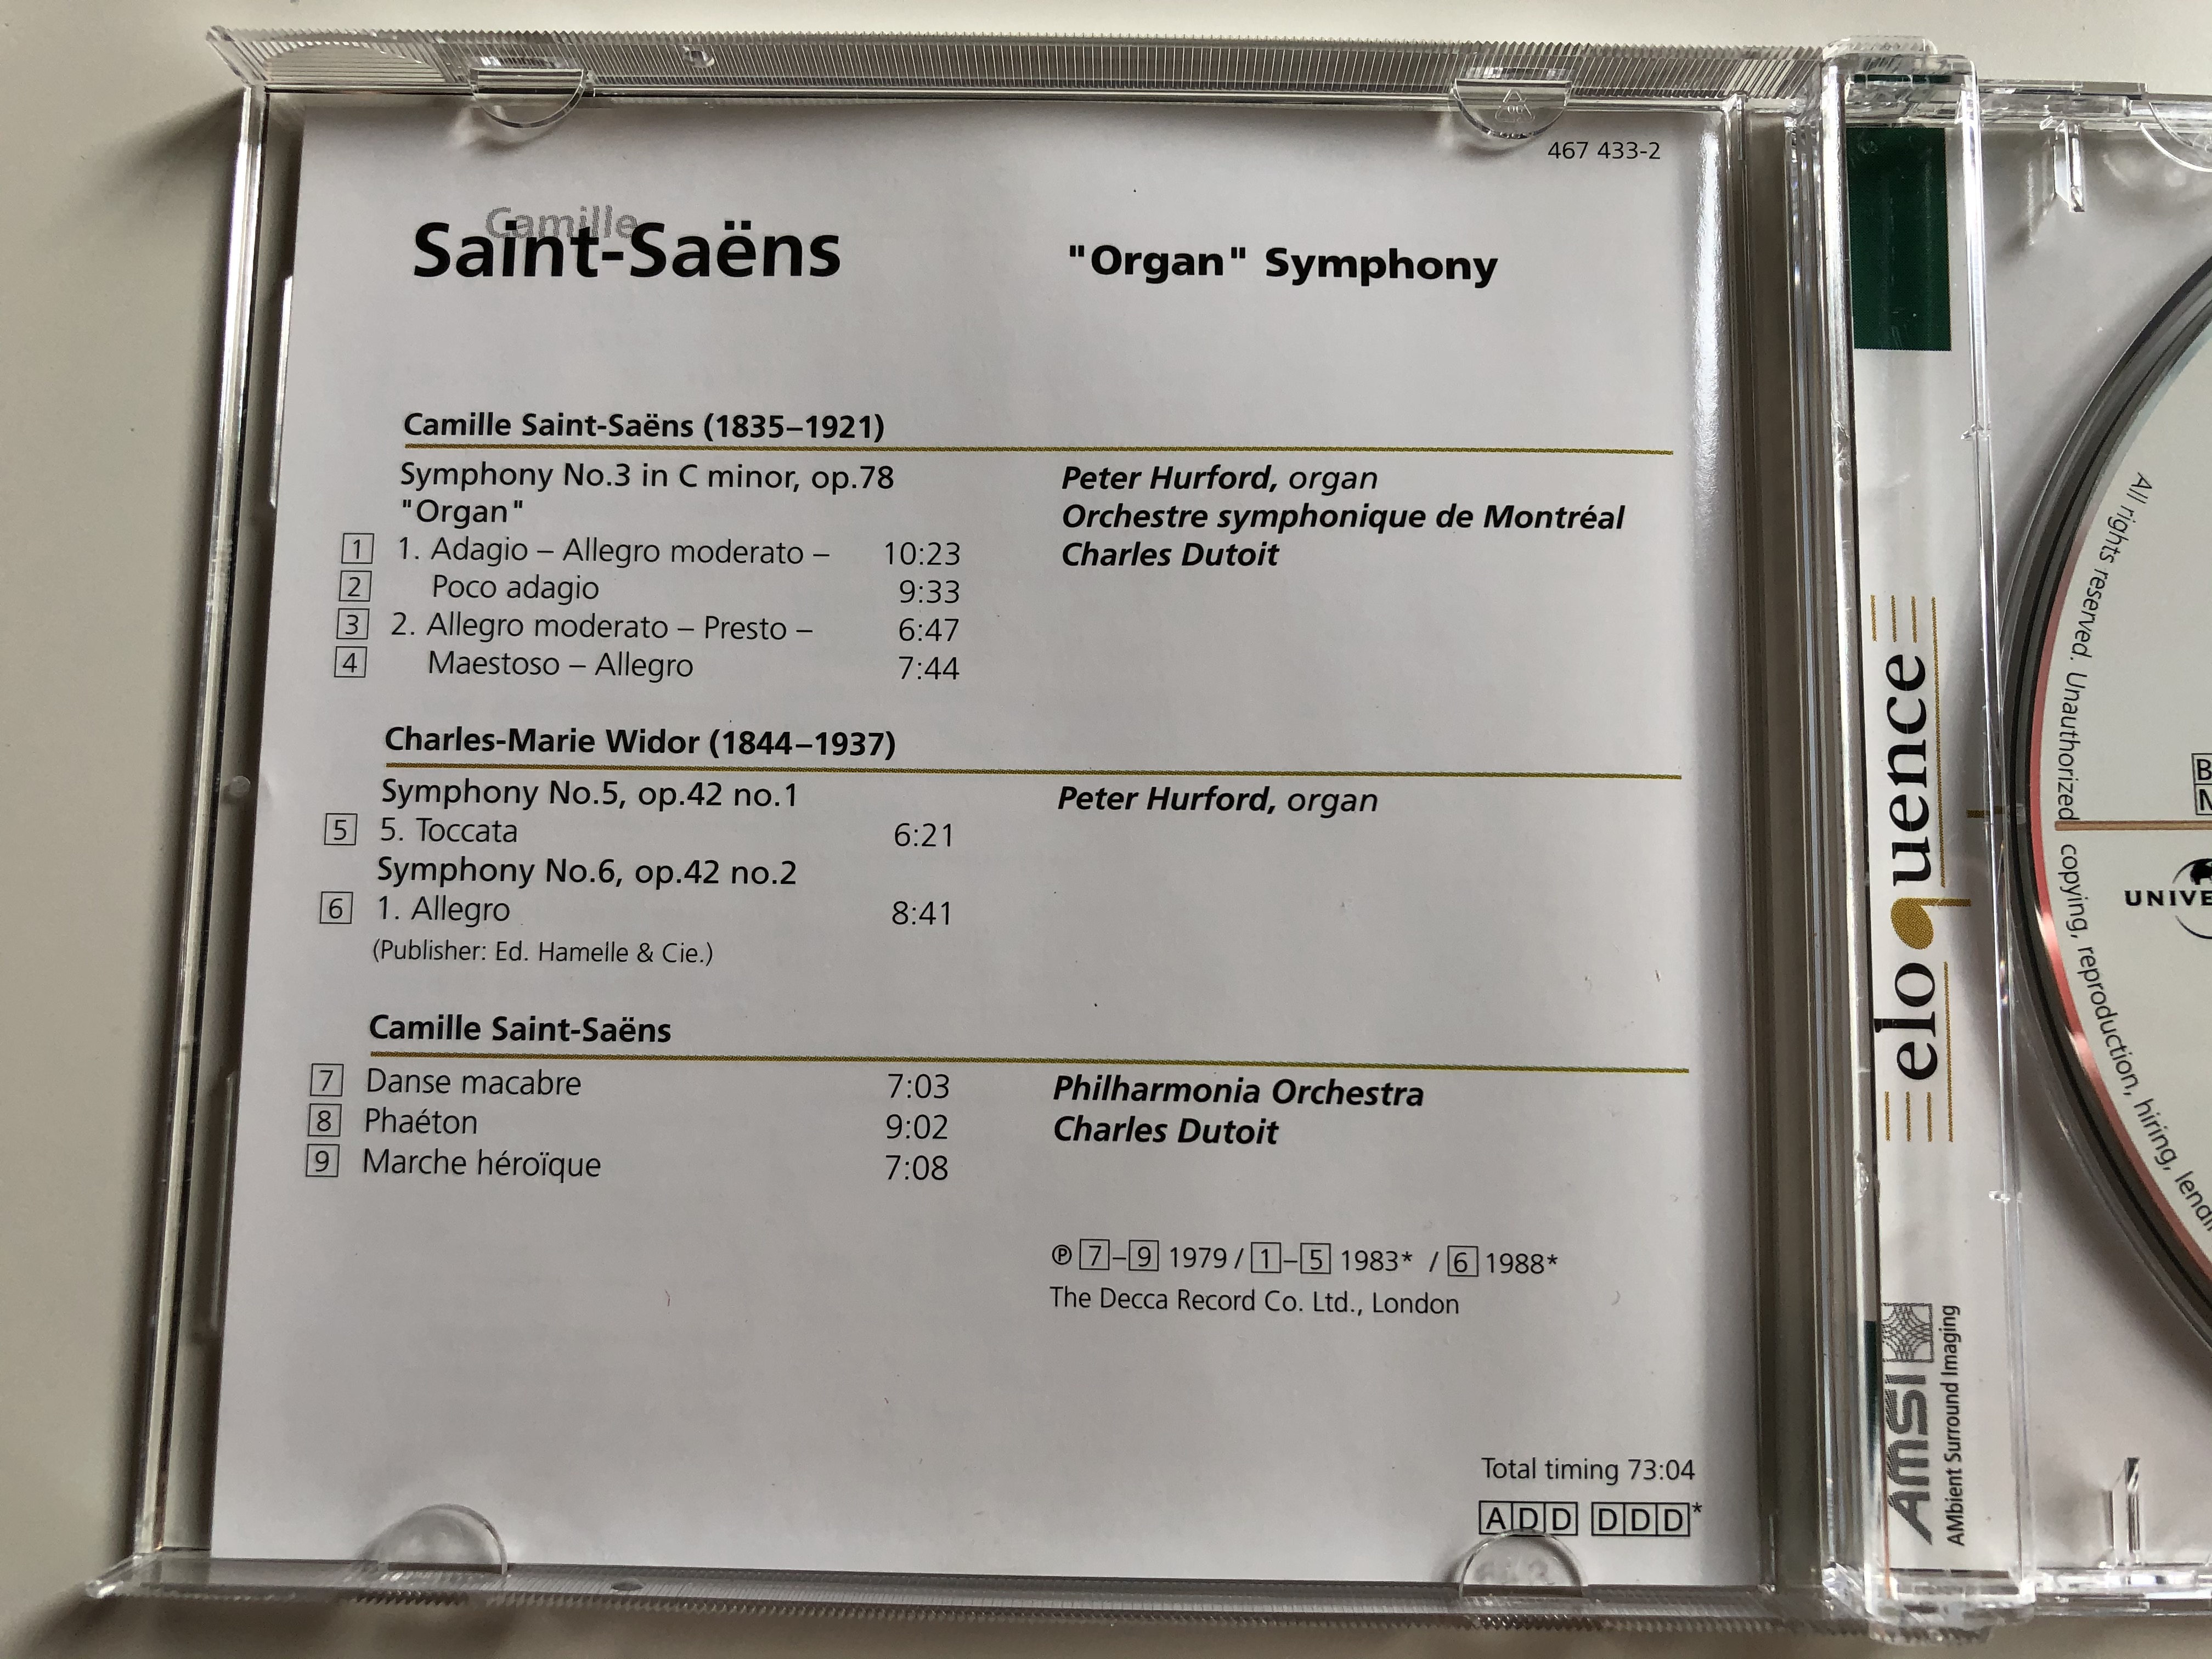 camille-saint-sa-ns-symphony-no.-3-organ-peter-hurford-orchestre-symphonique-de-montreal-dutoit-decca-audio-cd-467-433-2-2-.jpg